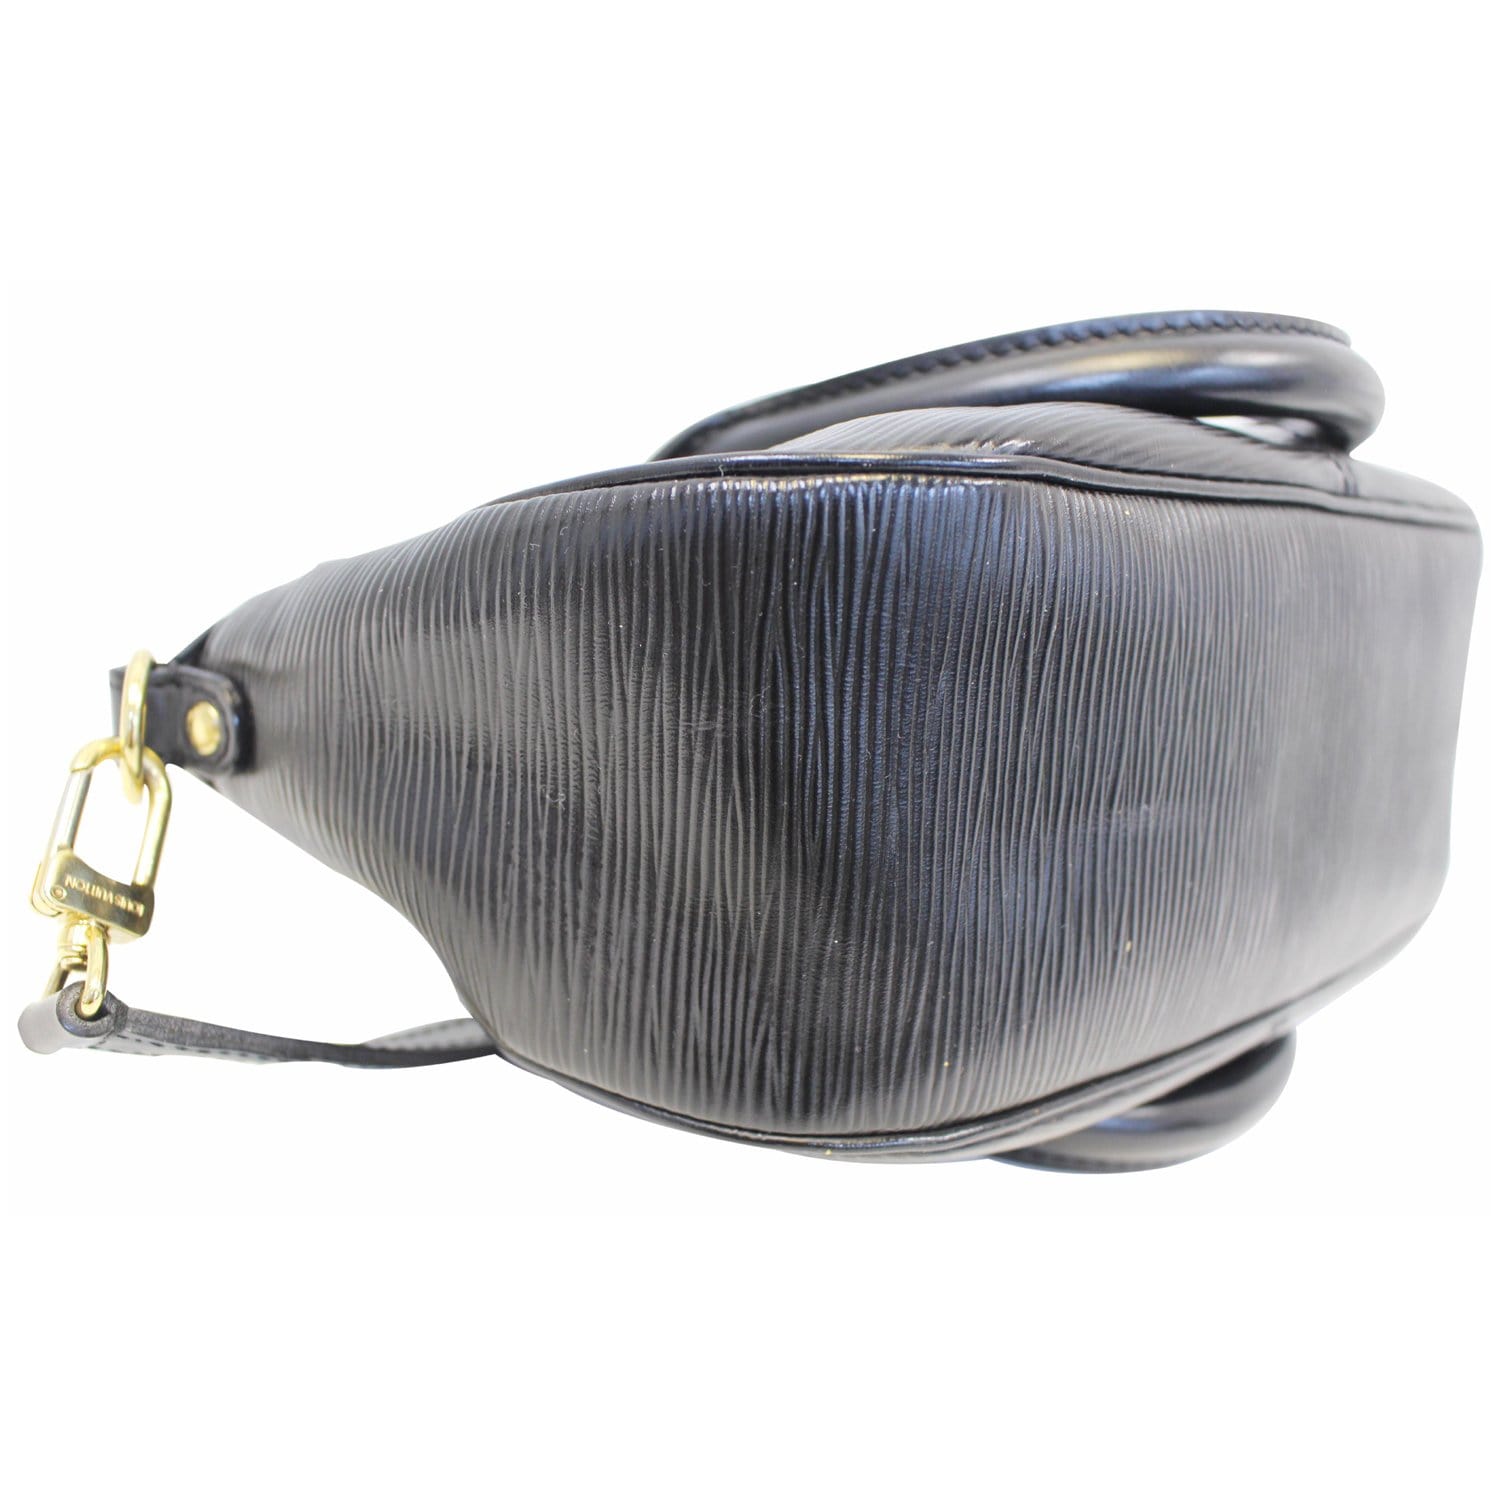 mm epi leather handbags